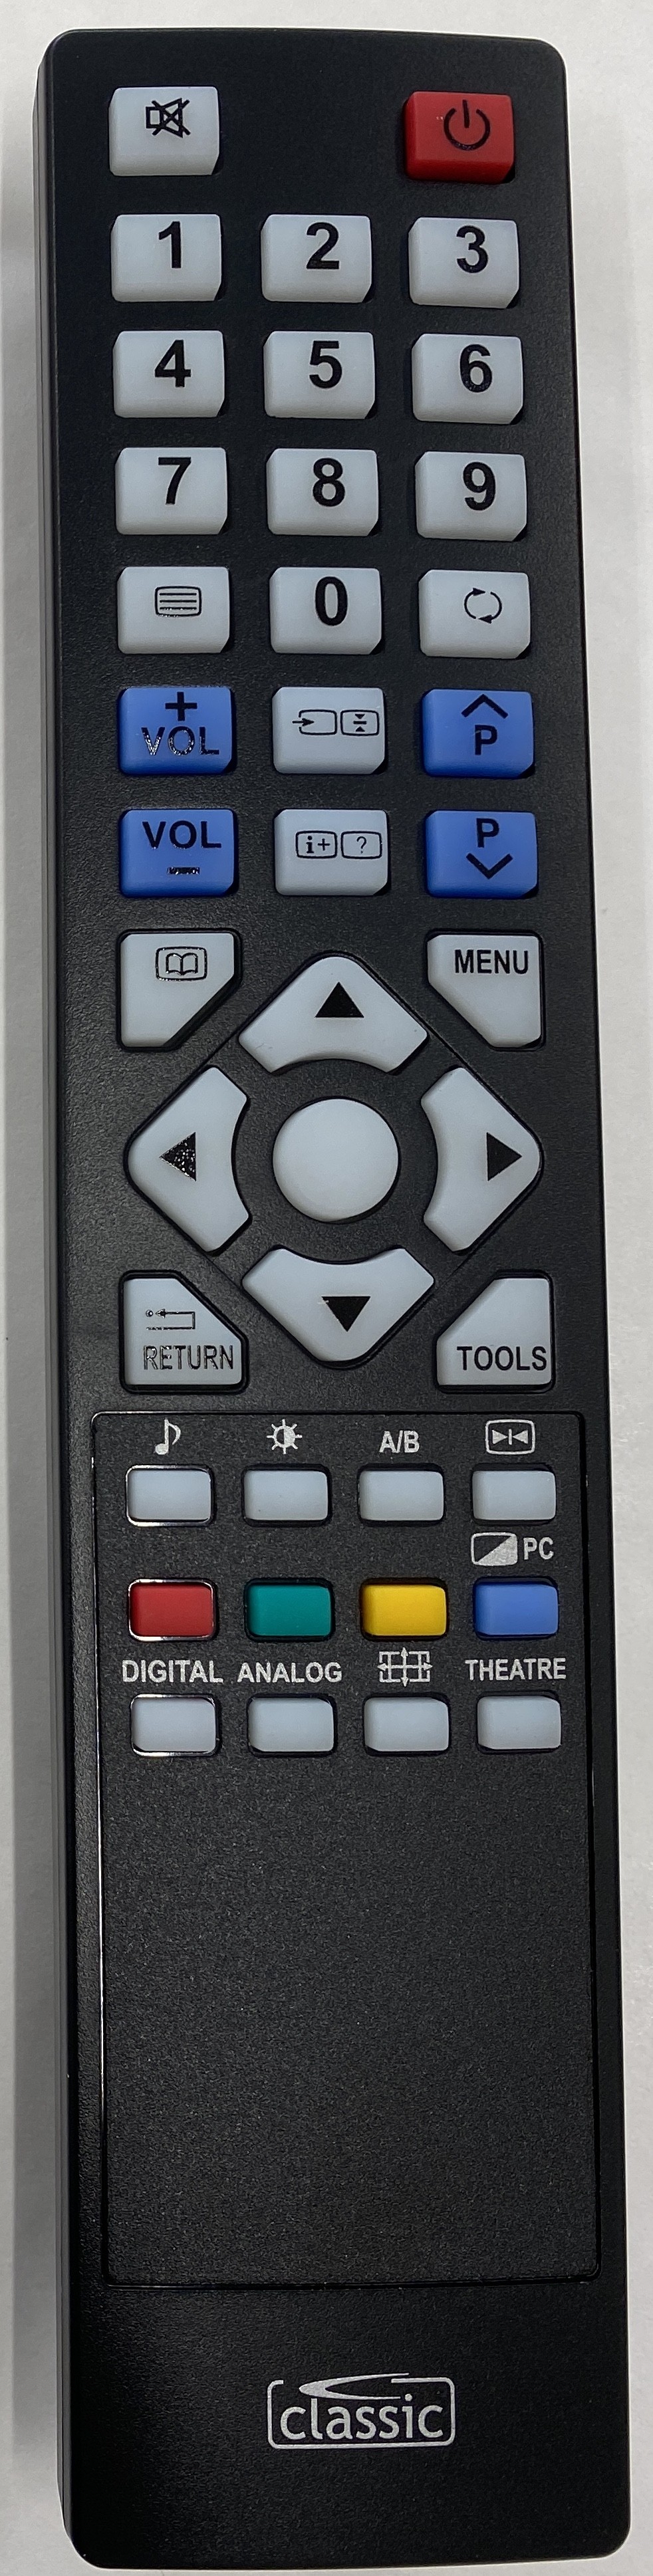 SONY KDL46X2000 Remote Control